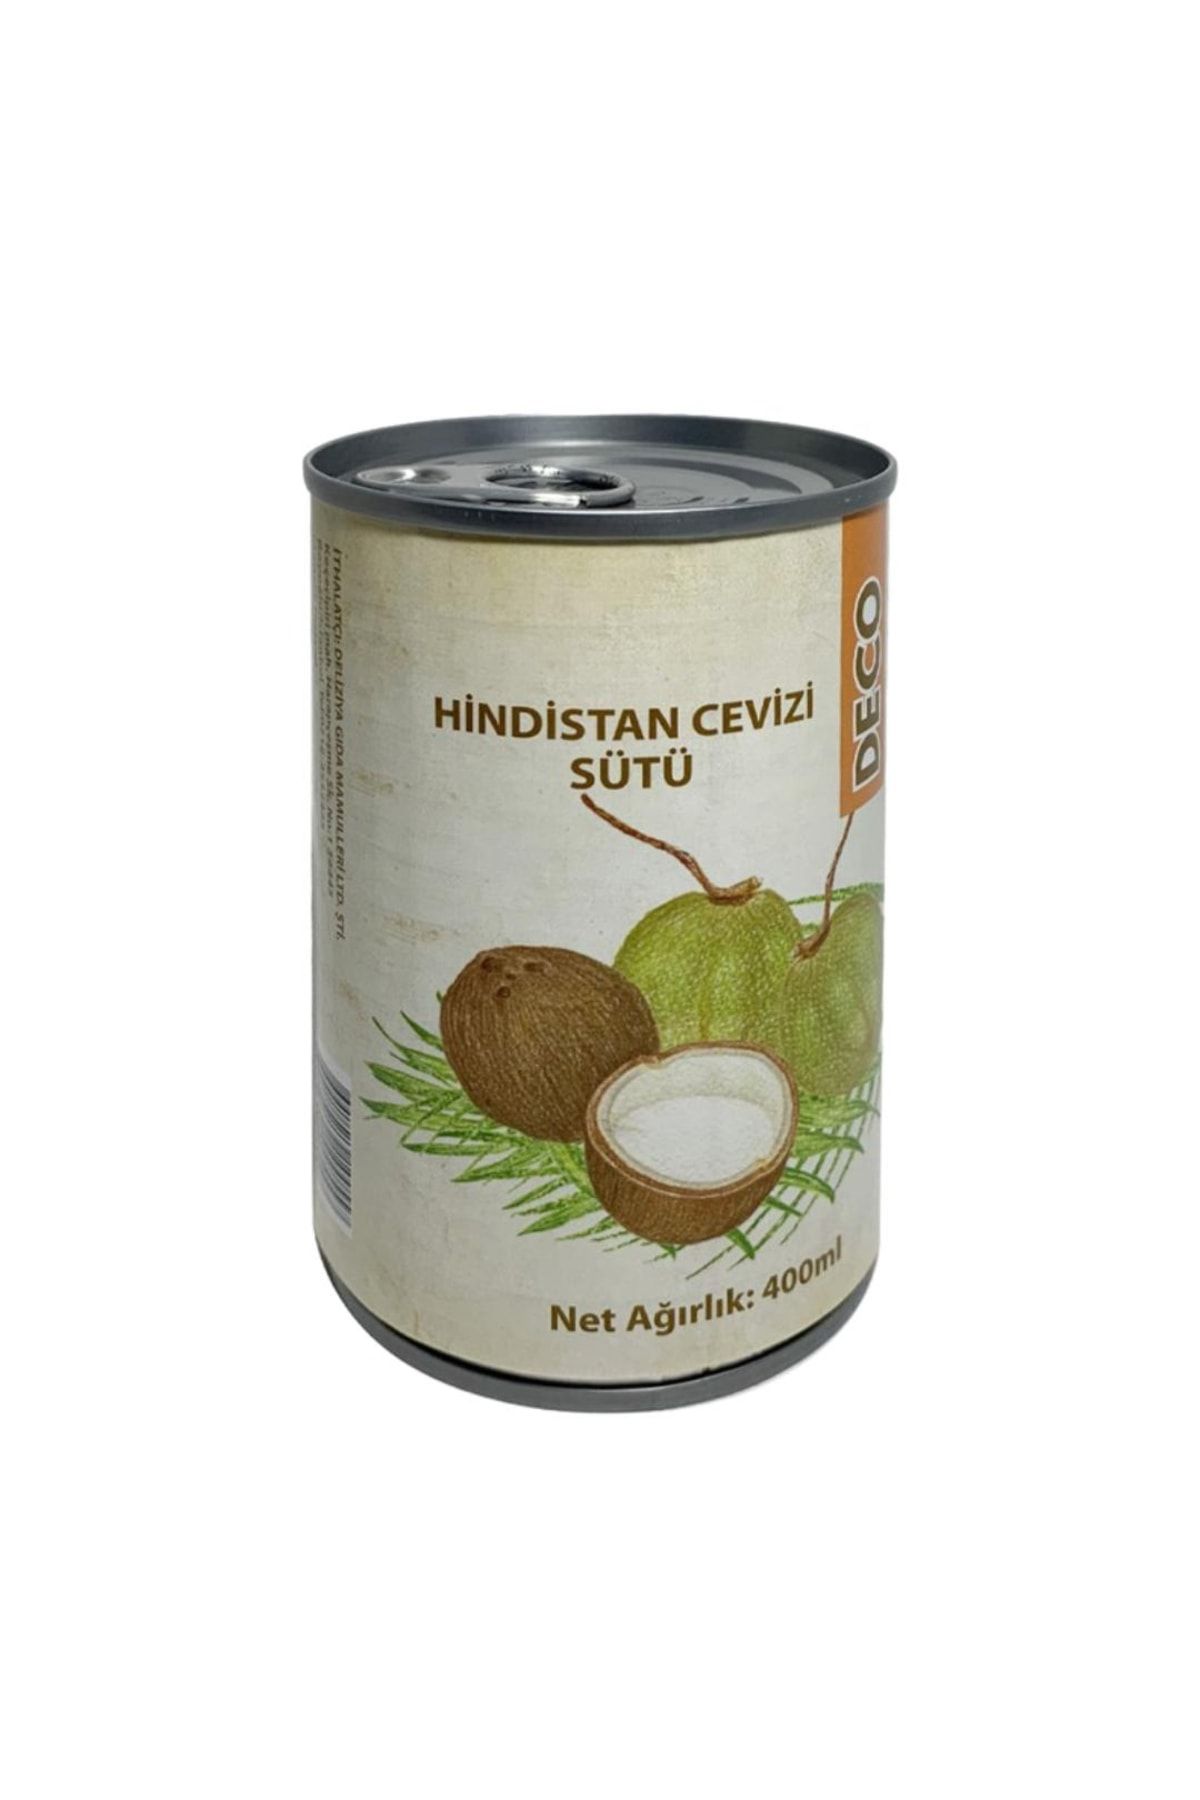 DECO Hindistan Cevizi Sütü 400ml Coconut Milk